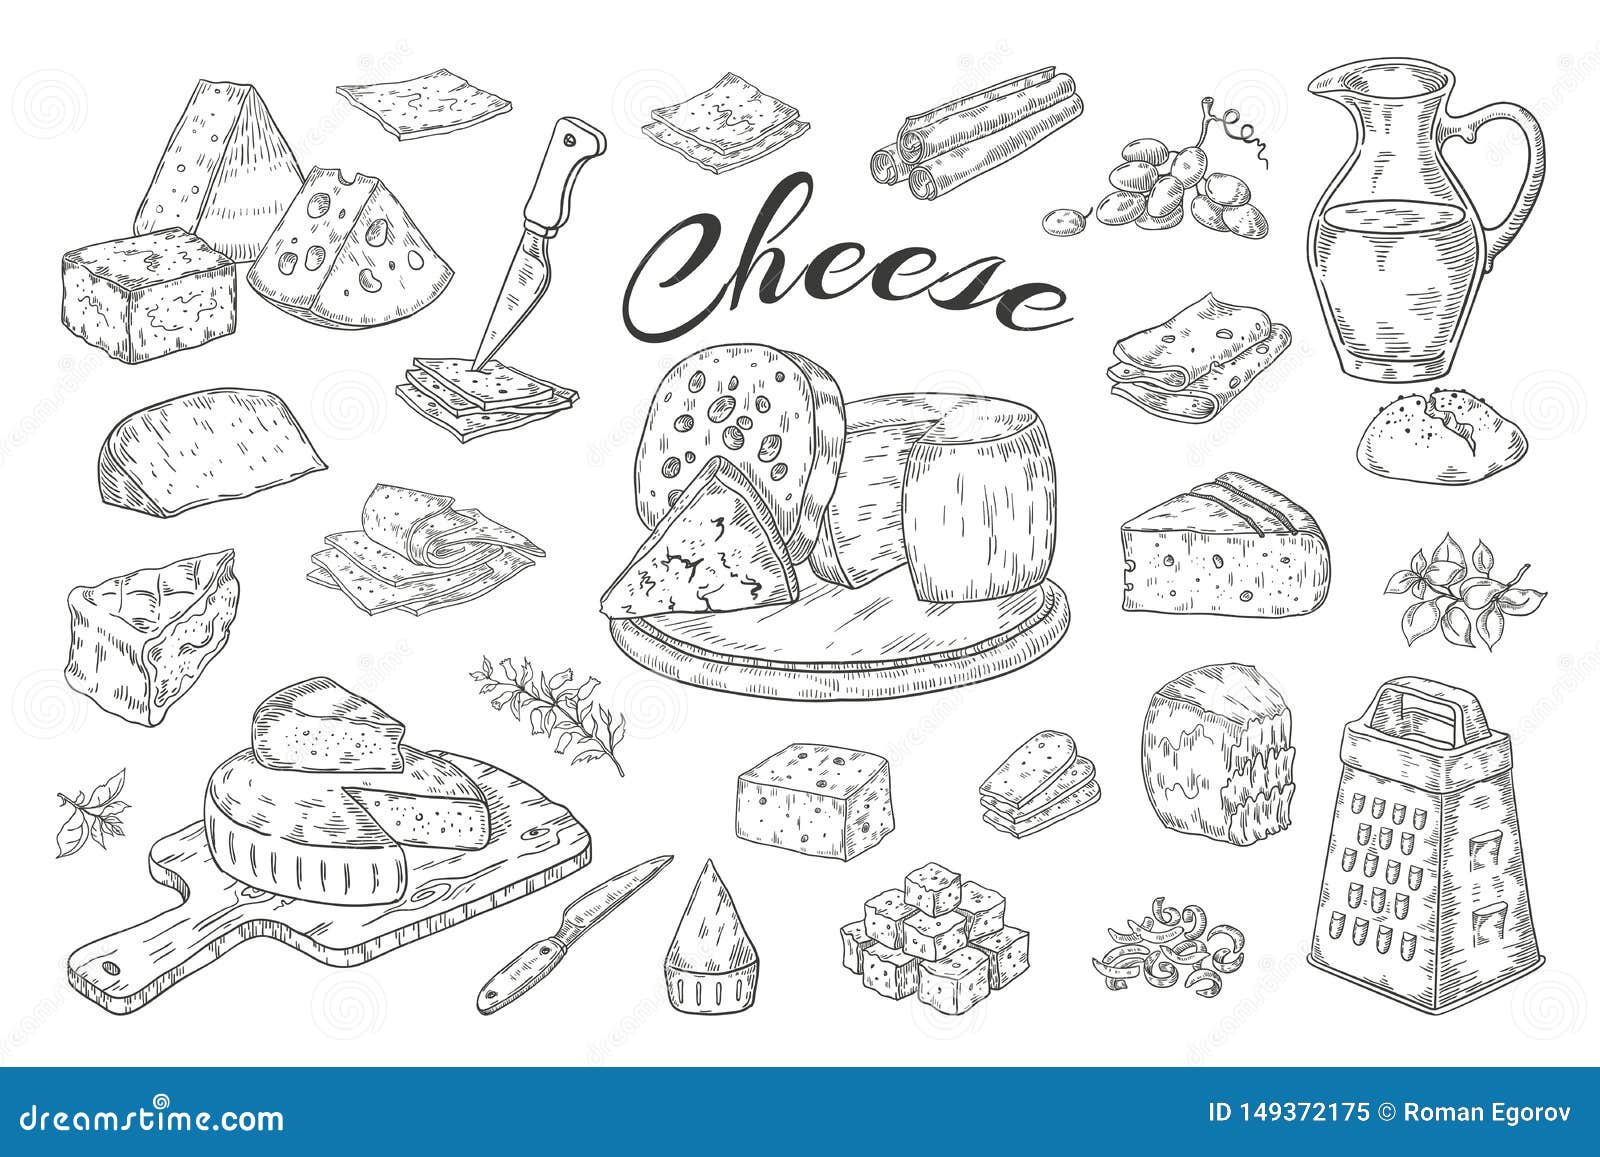 cheese sketch. hand drawn milk products, gourmet food slices, cheddar parmesan brie.  breakfast vintage